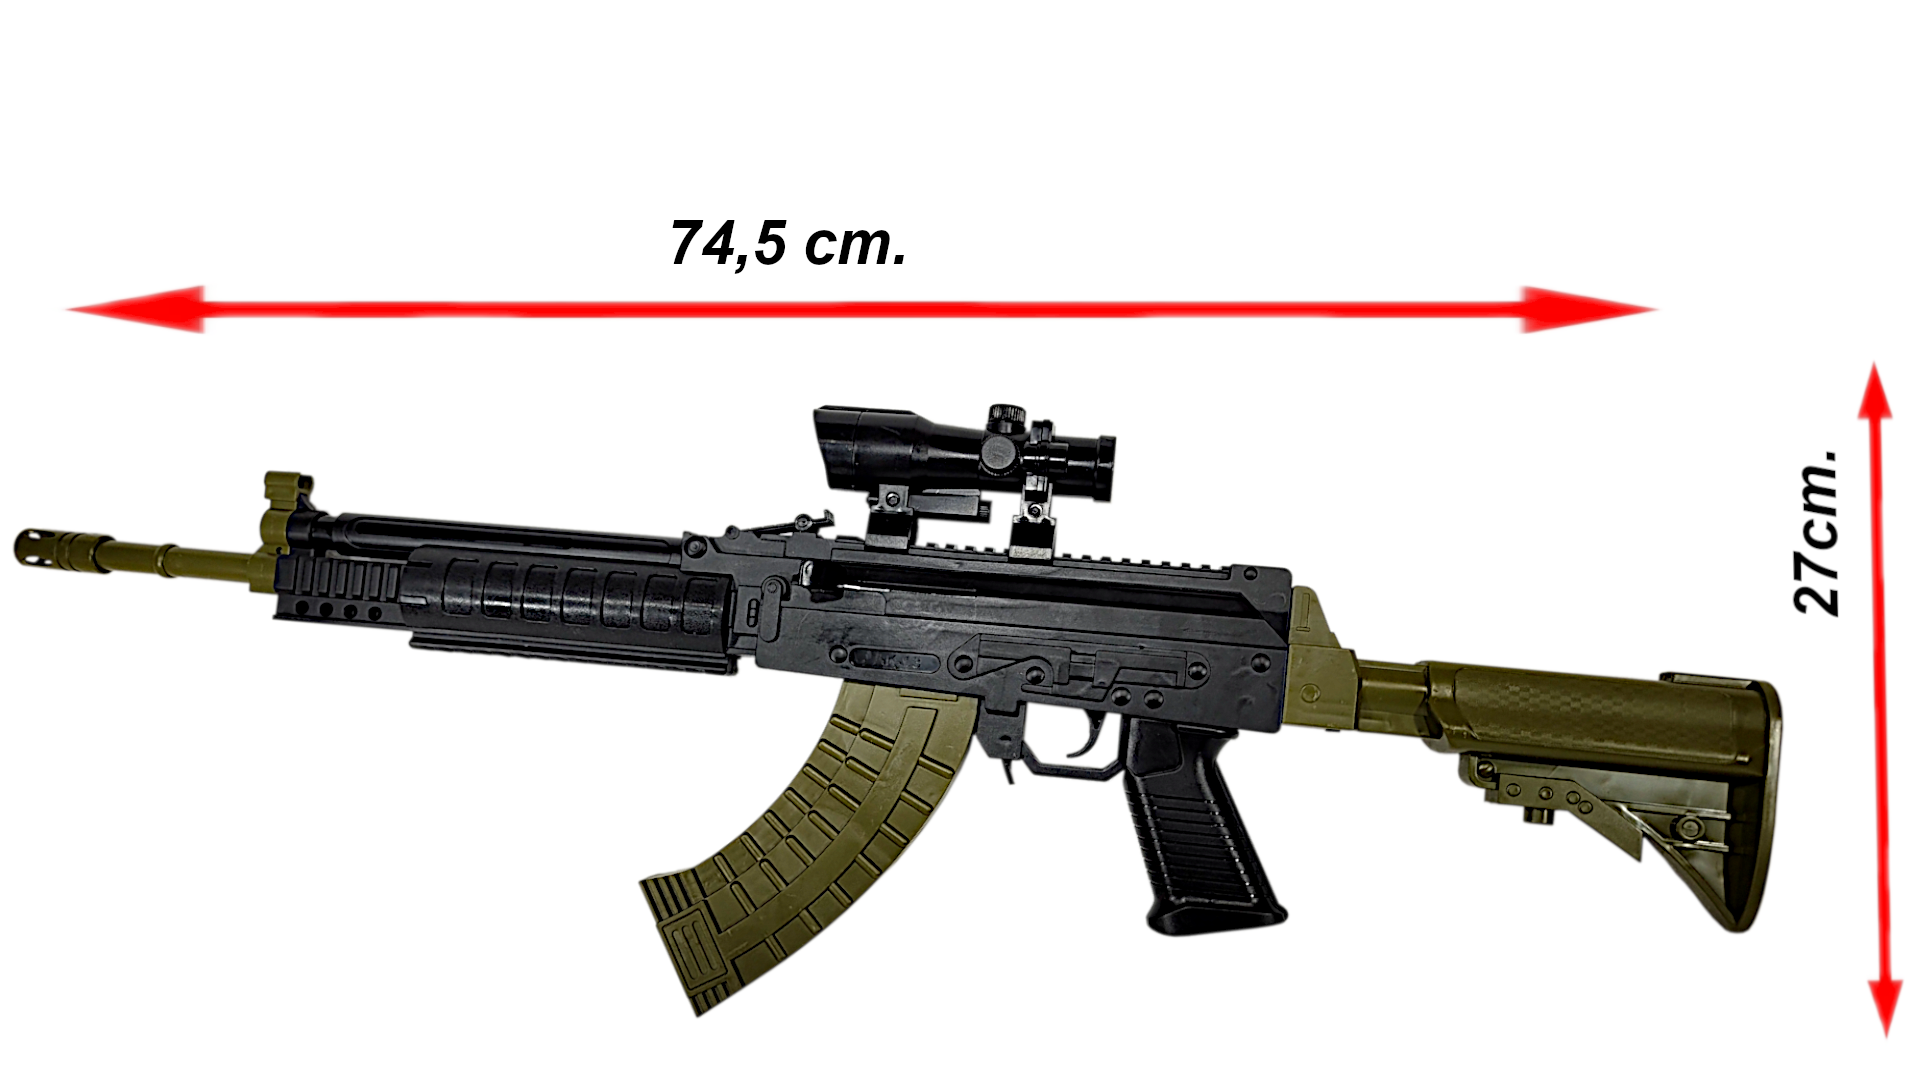 Karabin Snajperka Na Kulki 6mm. AK13+Celownik Laser, Replika Tomdorix